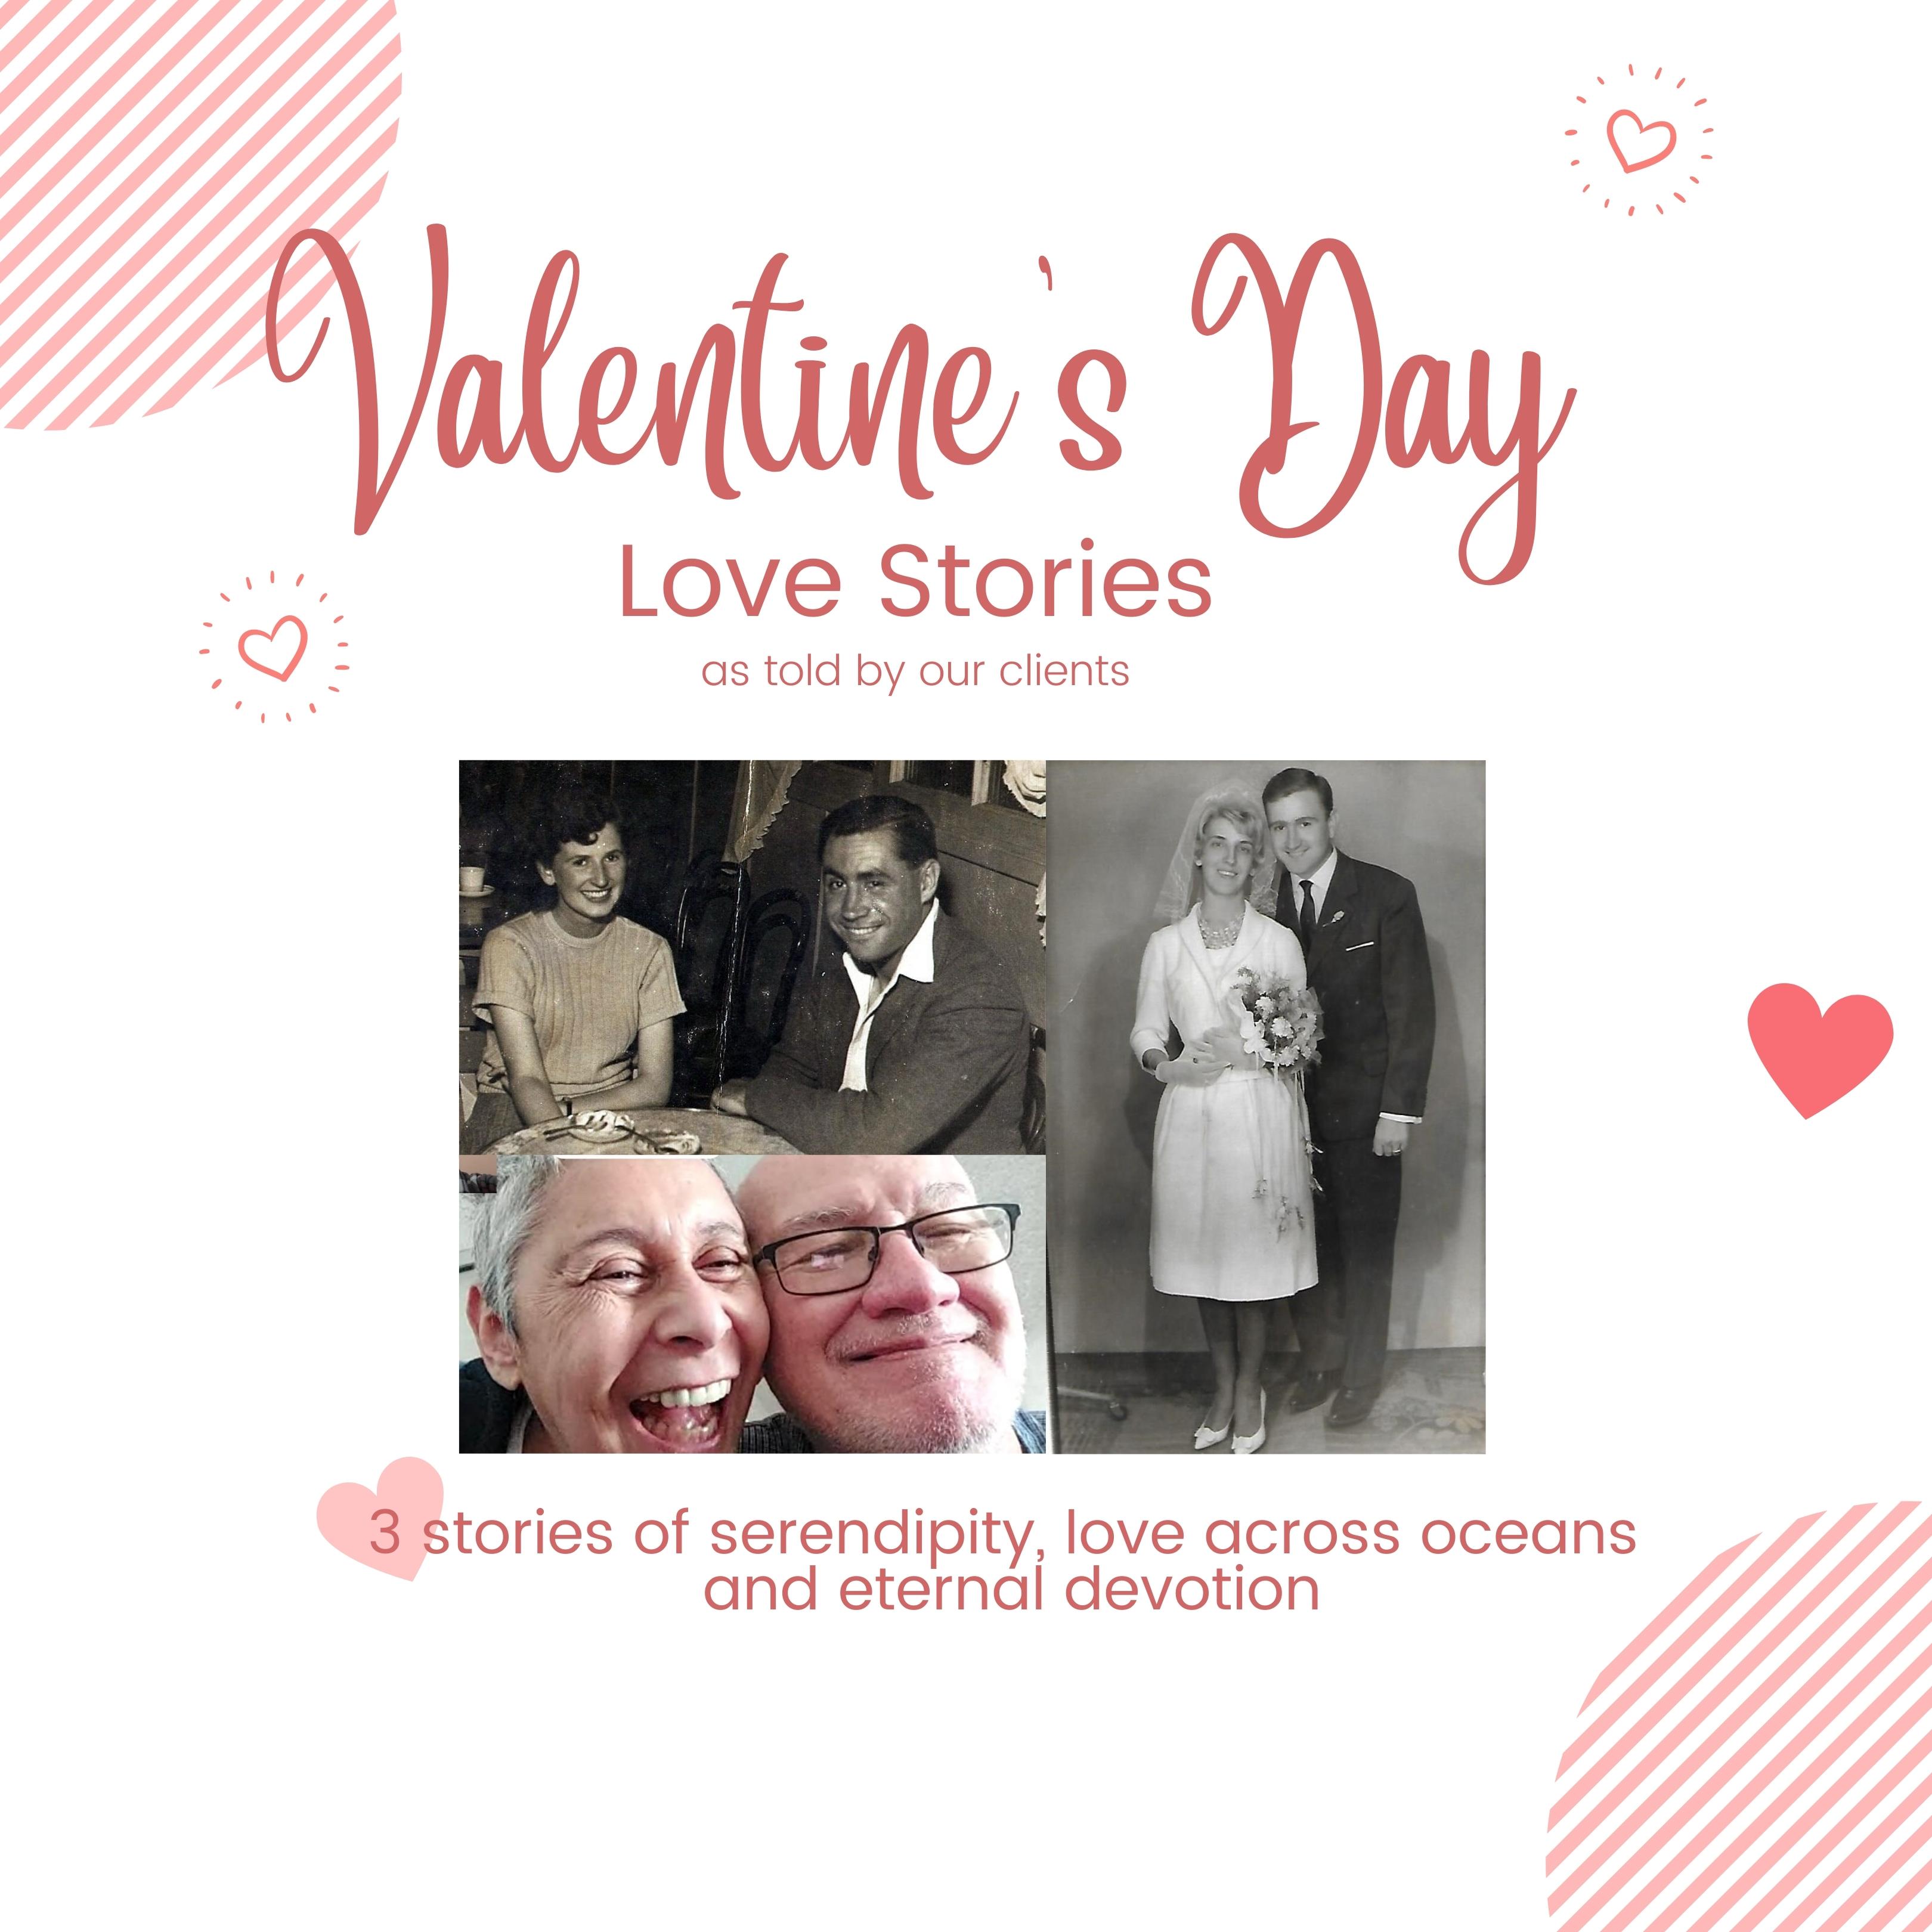 Three stories of true love